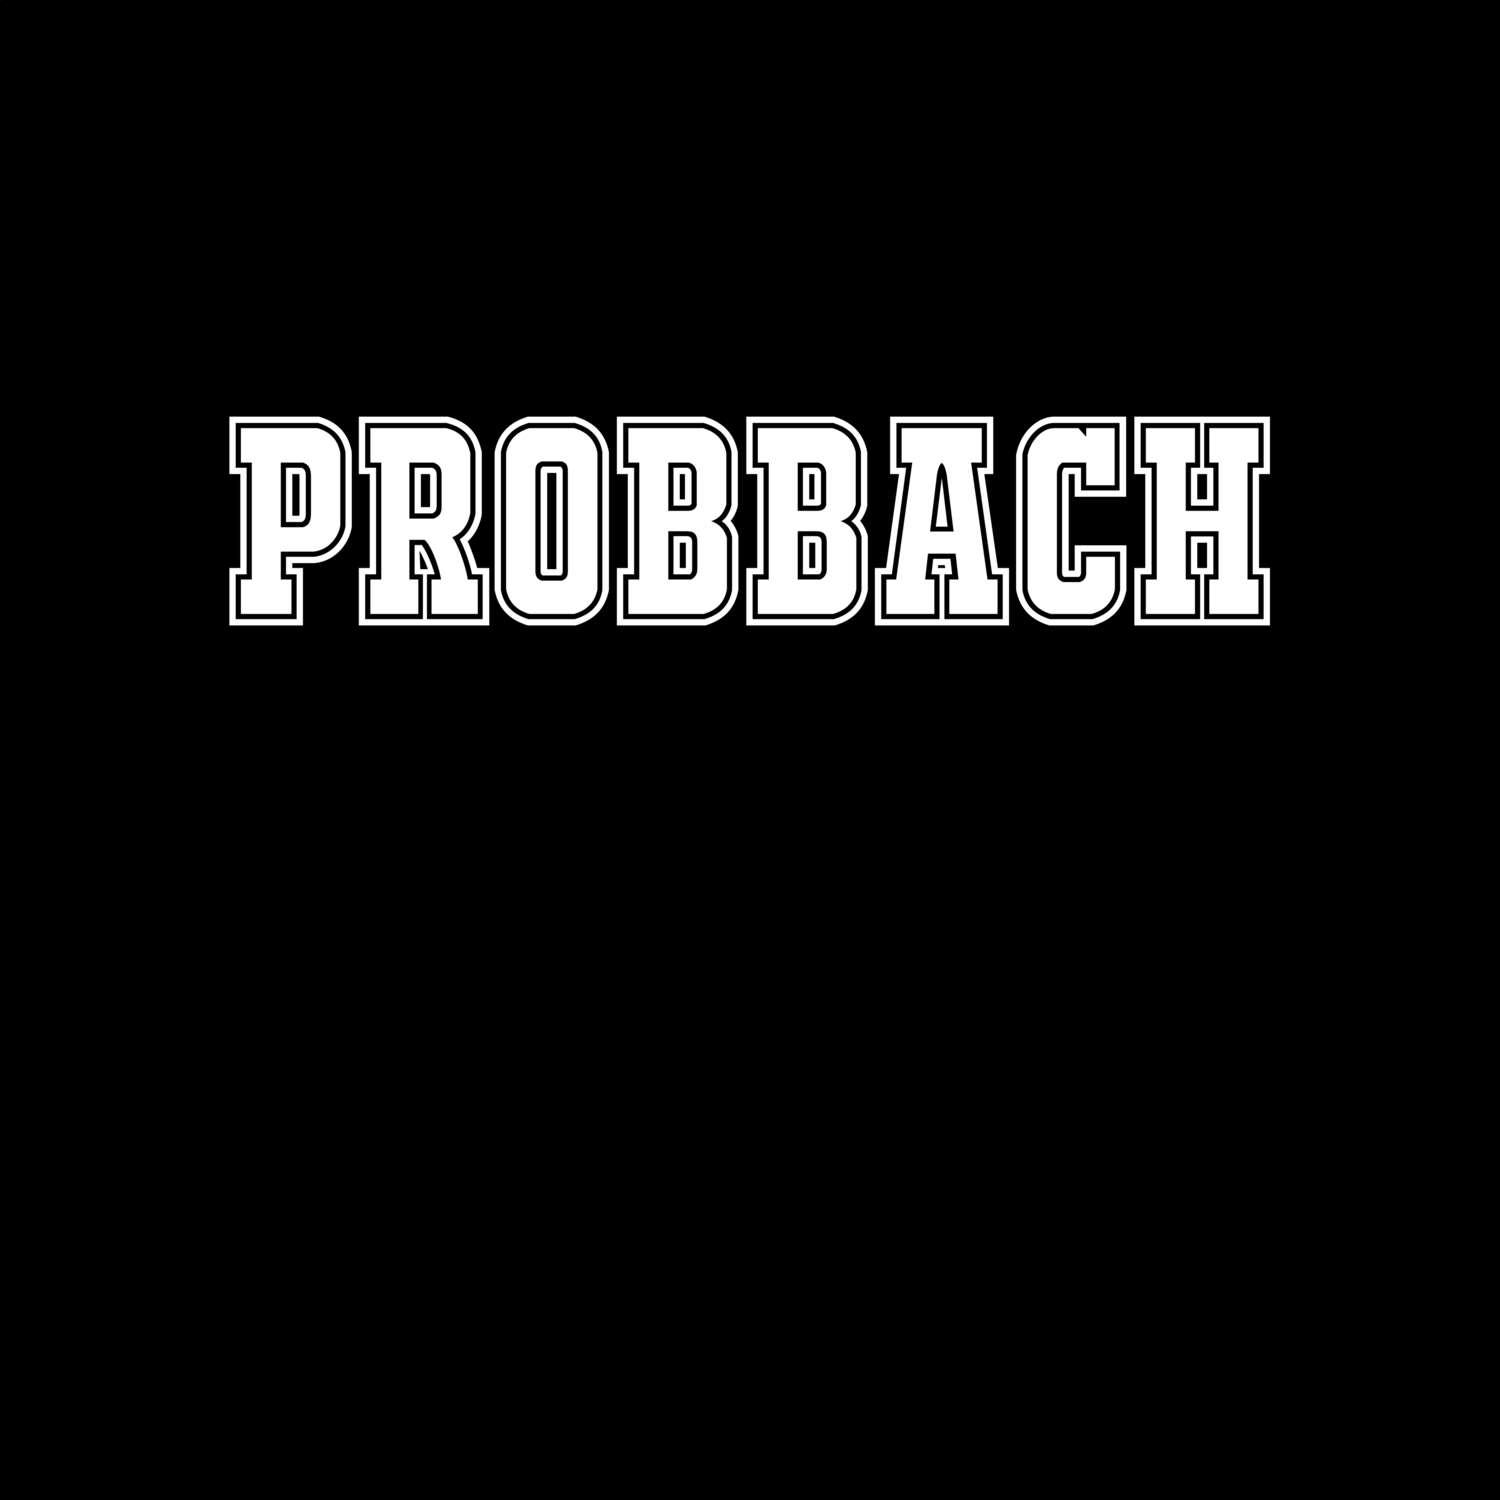 Probbach T-Shirt »Classic«